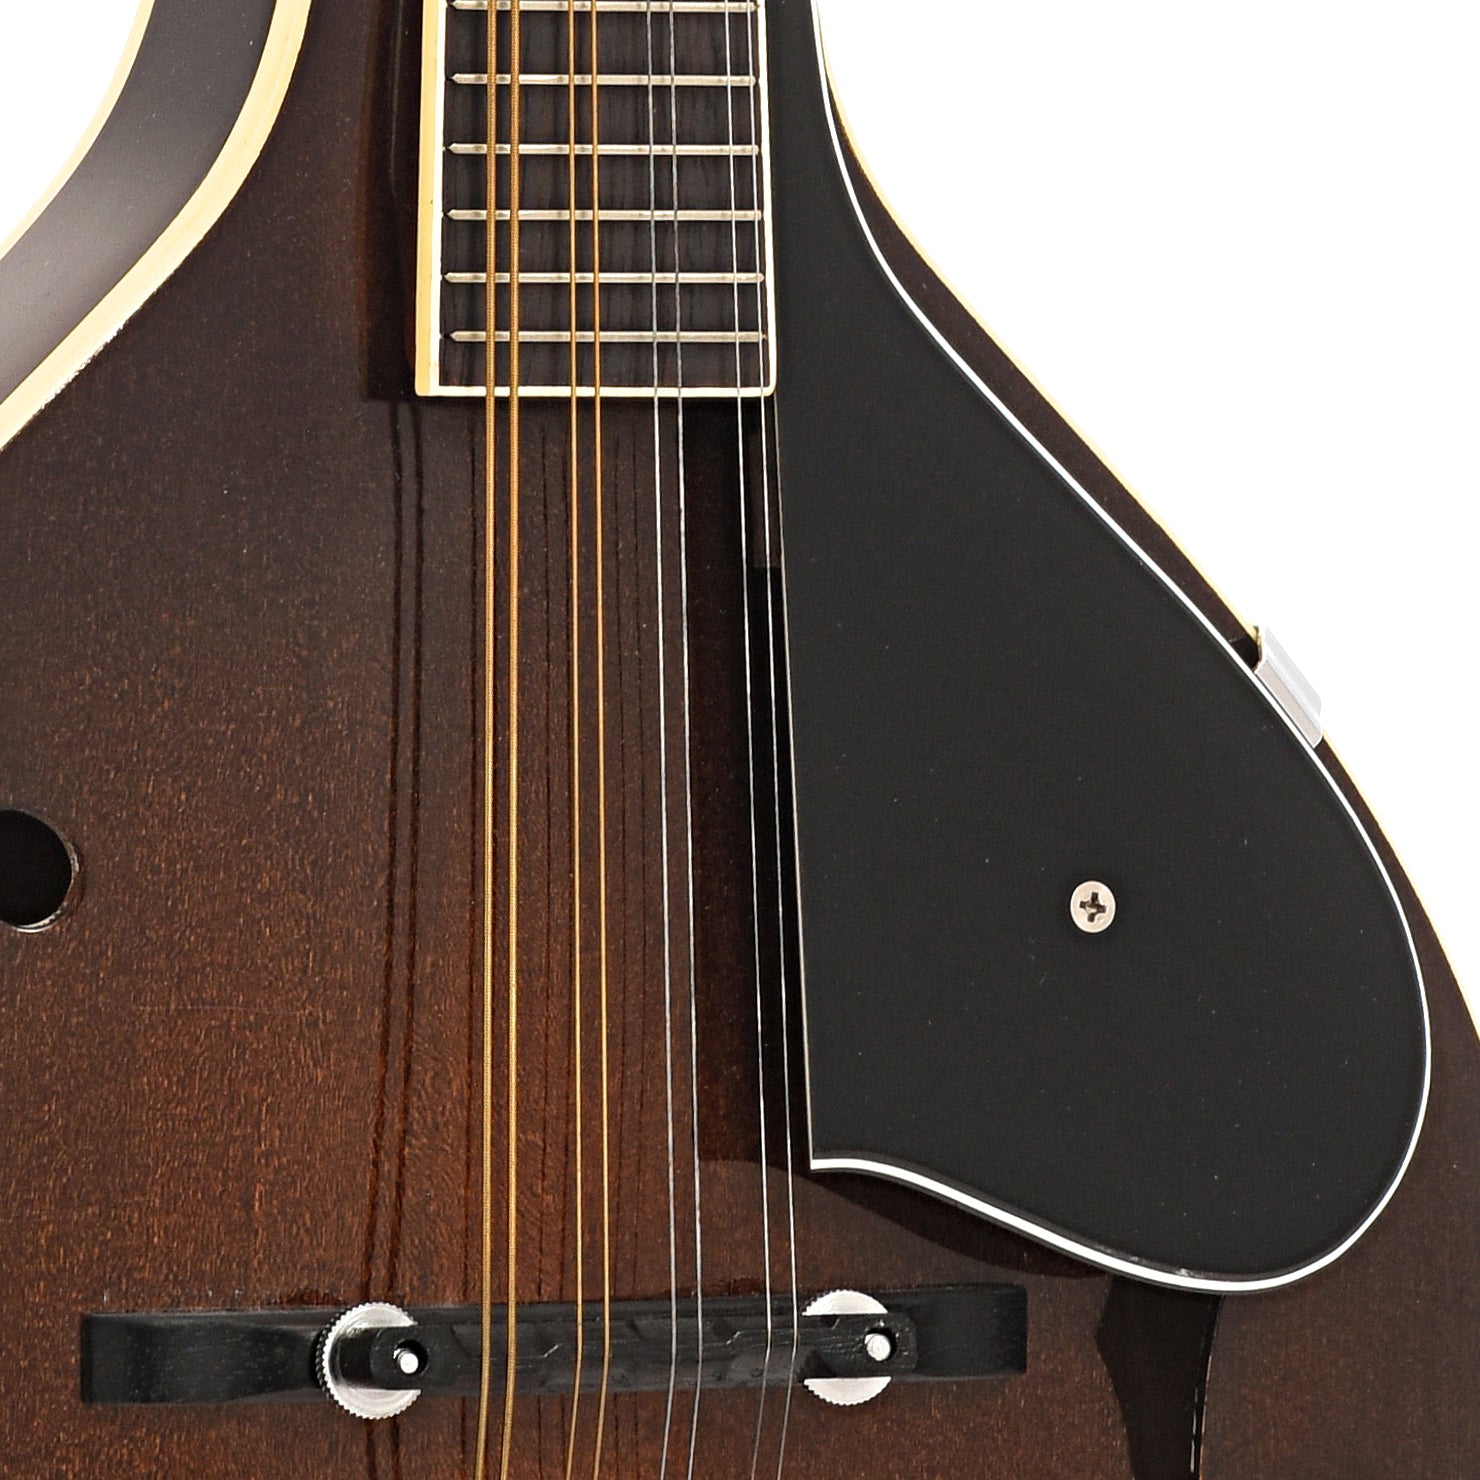 Bridge and pickguard of Kentucky KM250S mandolin